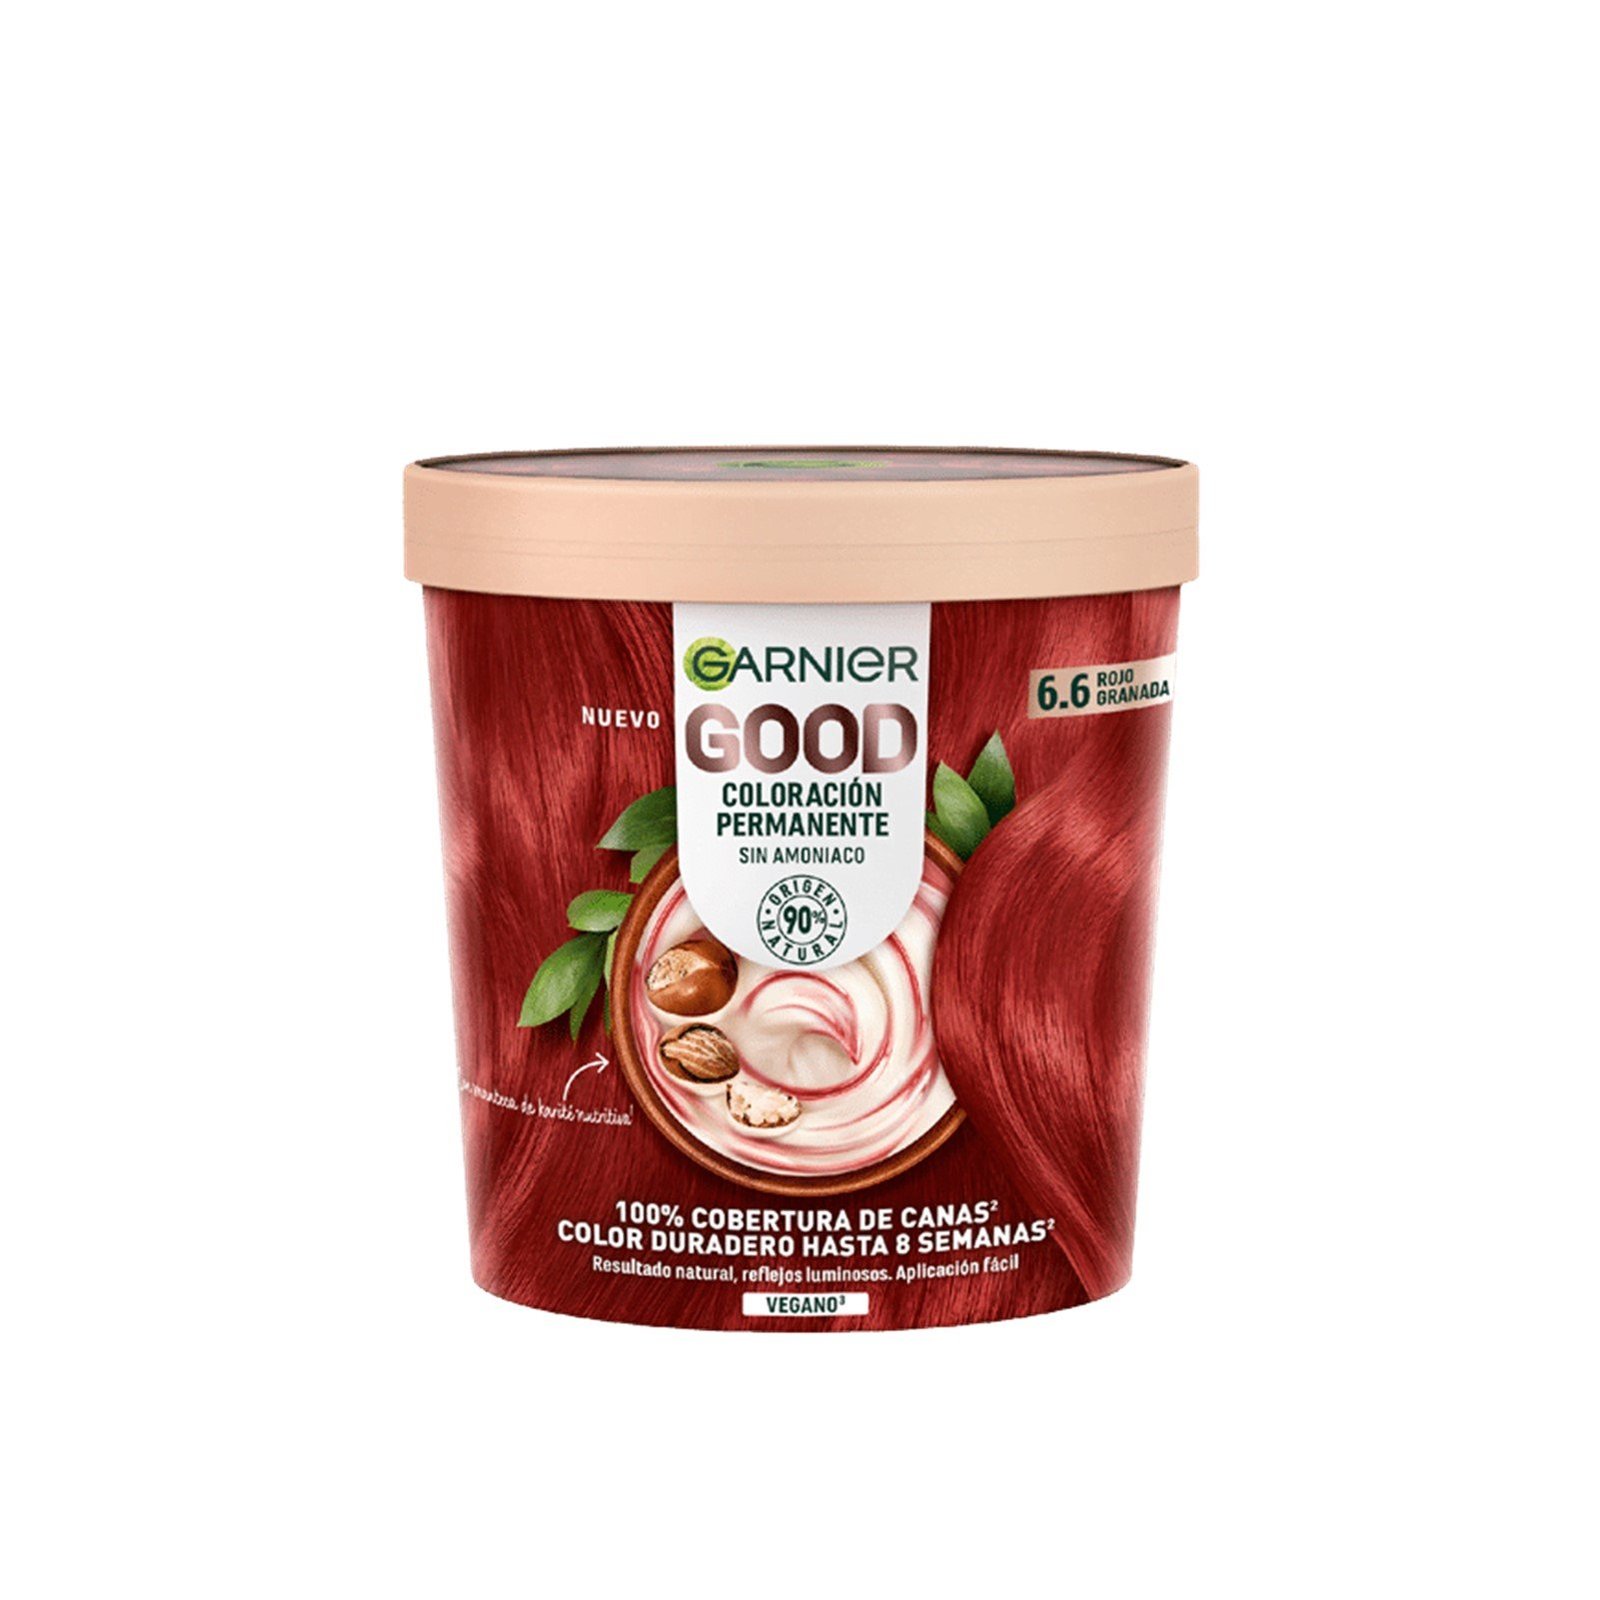 Garnier Good Permanent Hair Dye 6.6 Pomegranate Red